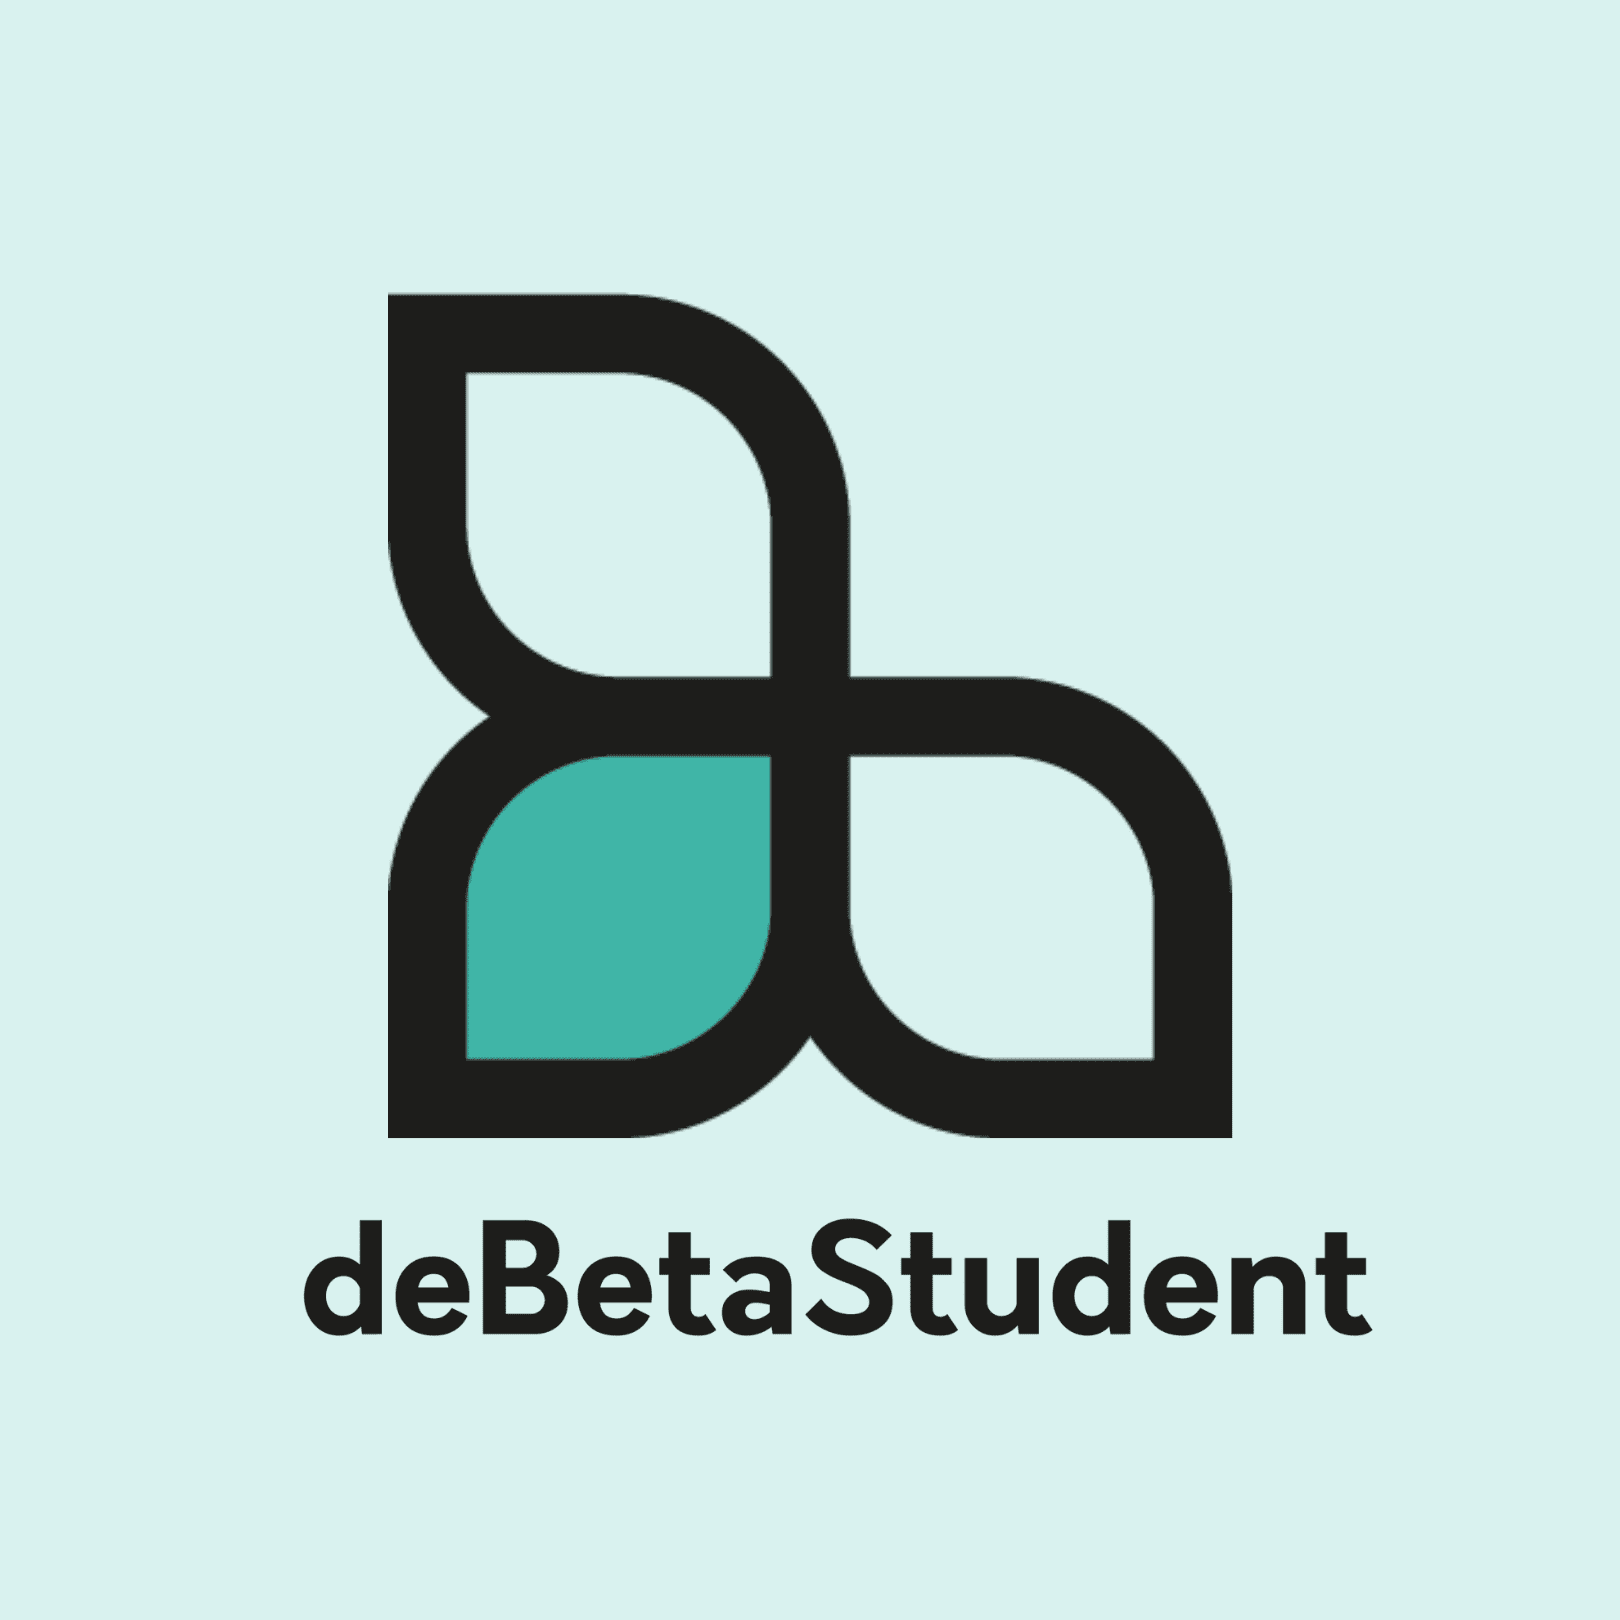 deBeta Student